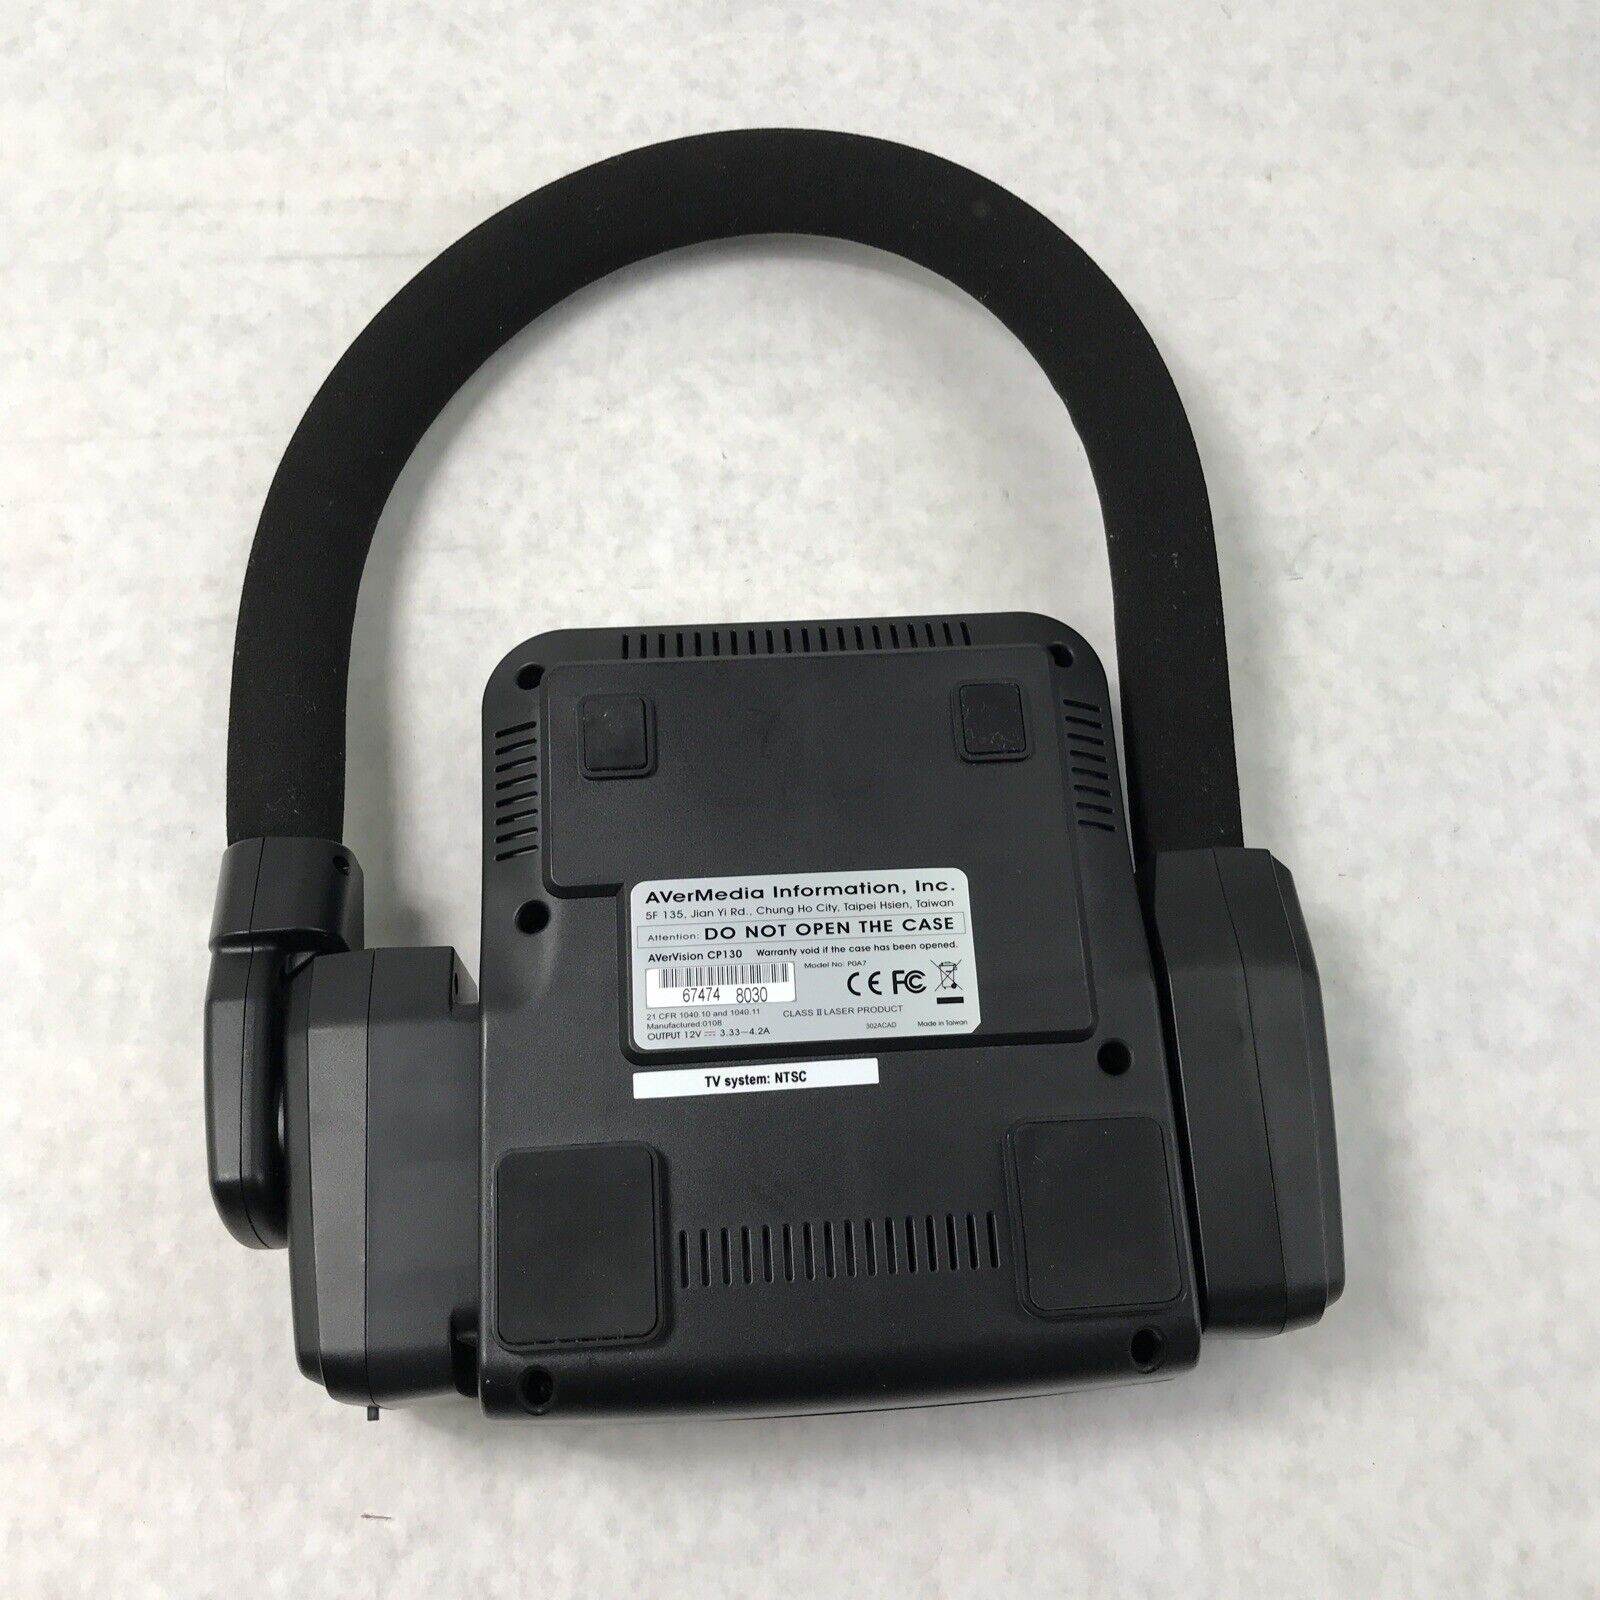 AverVision AVerMedia CP130 Portable Digital Document Camera Presenter